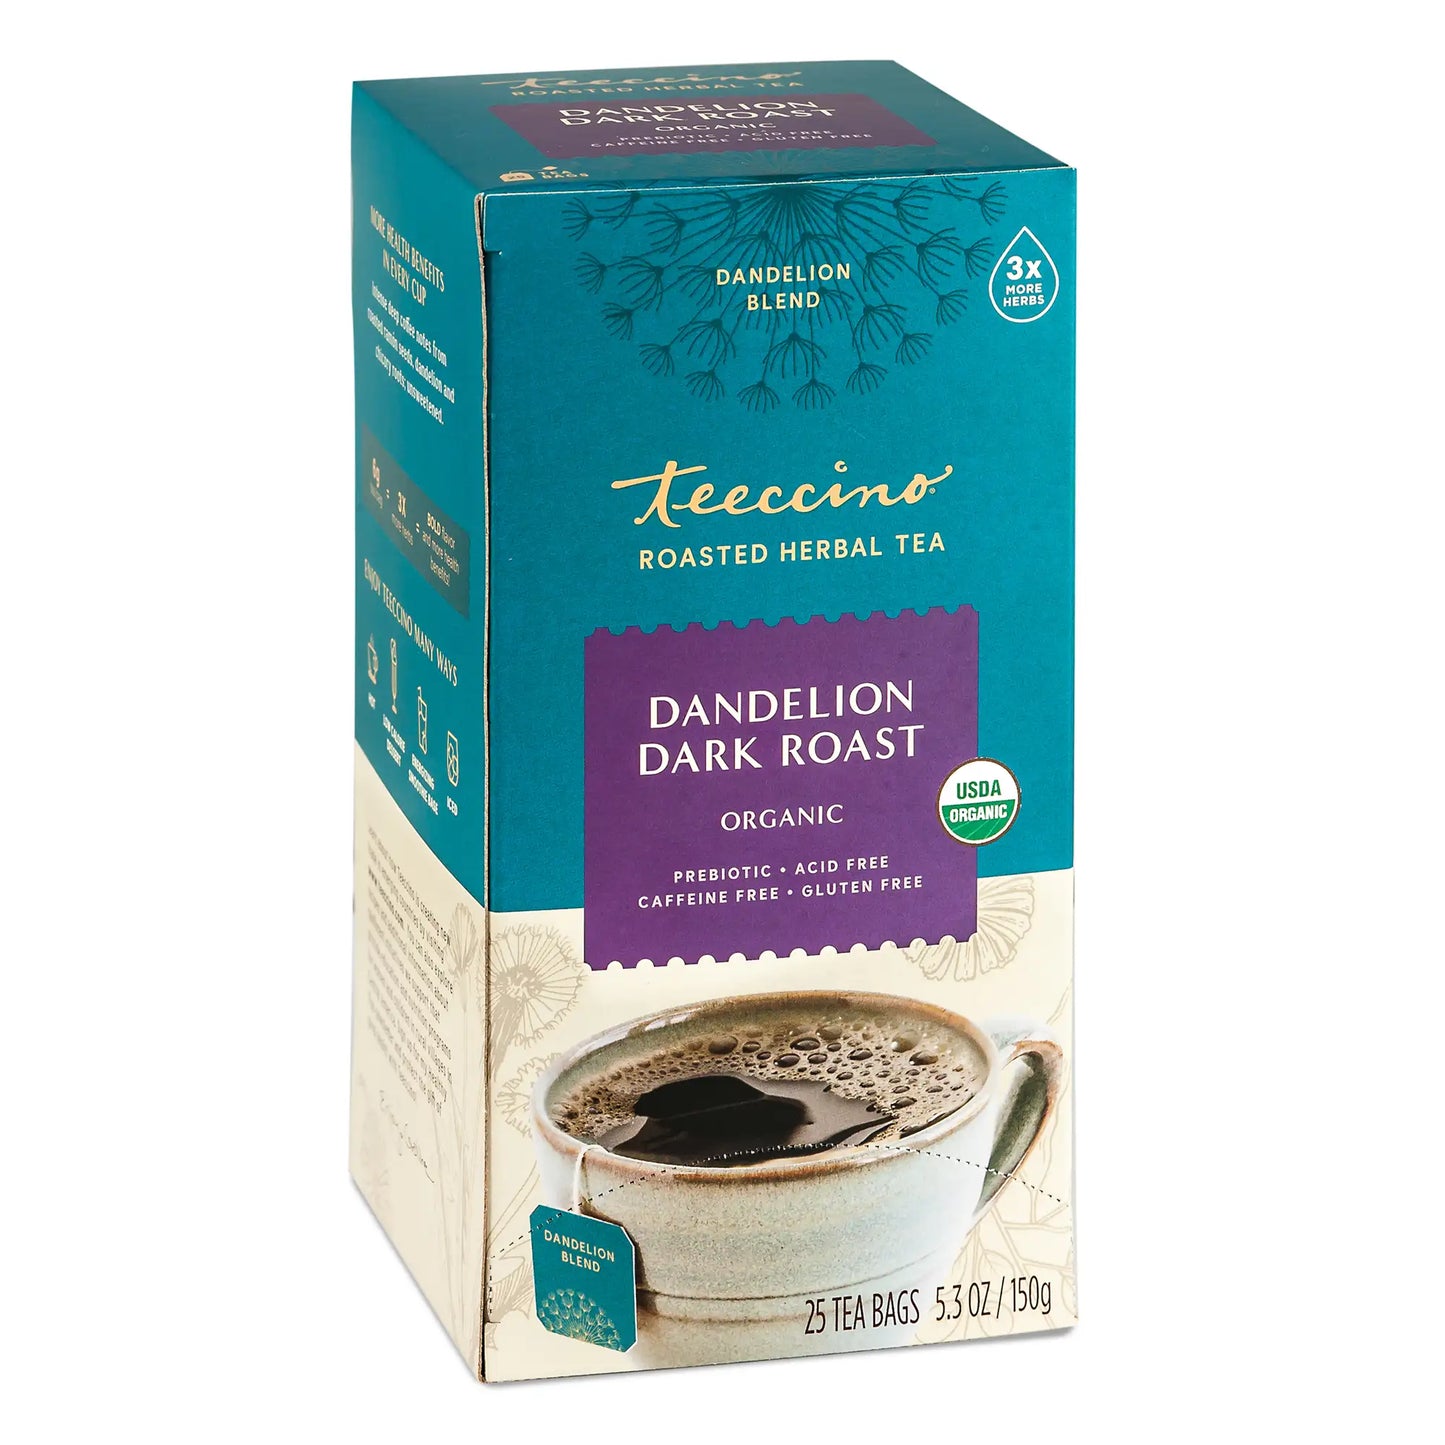 Dandelion Dark Roast Herbal Tea